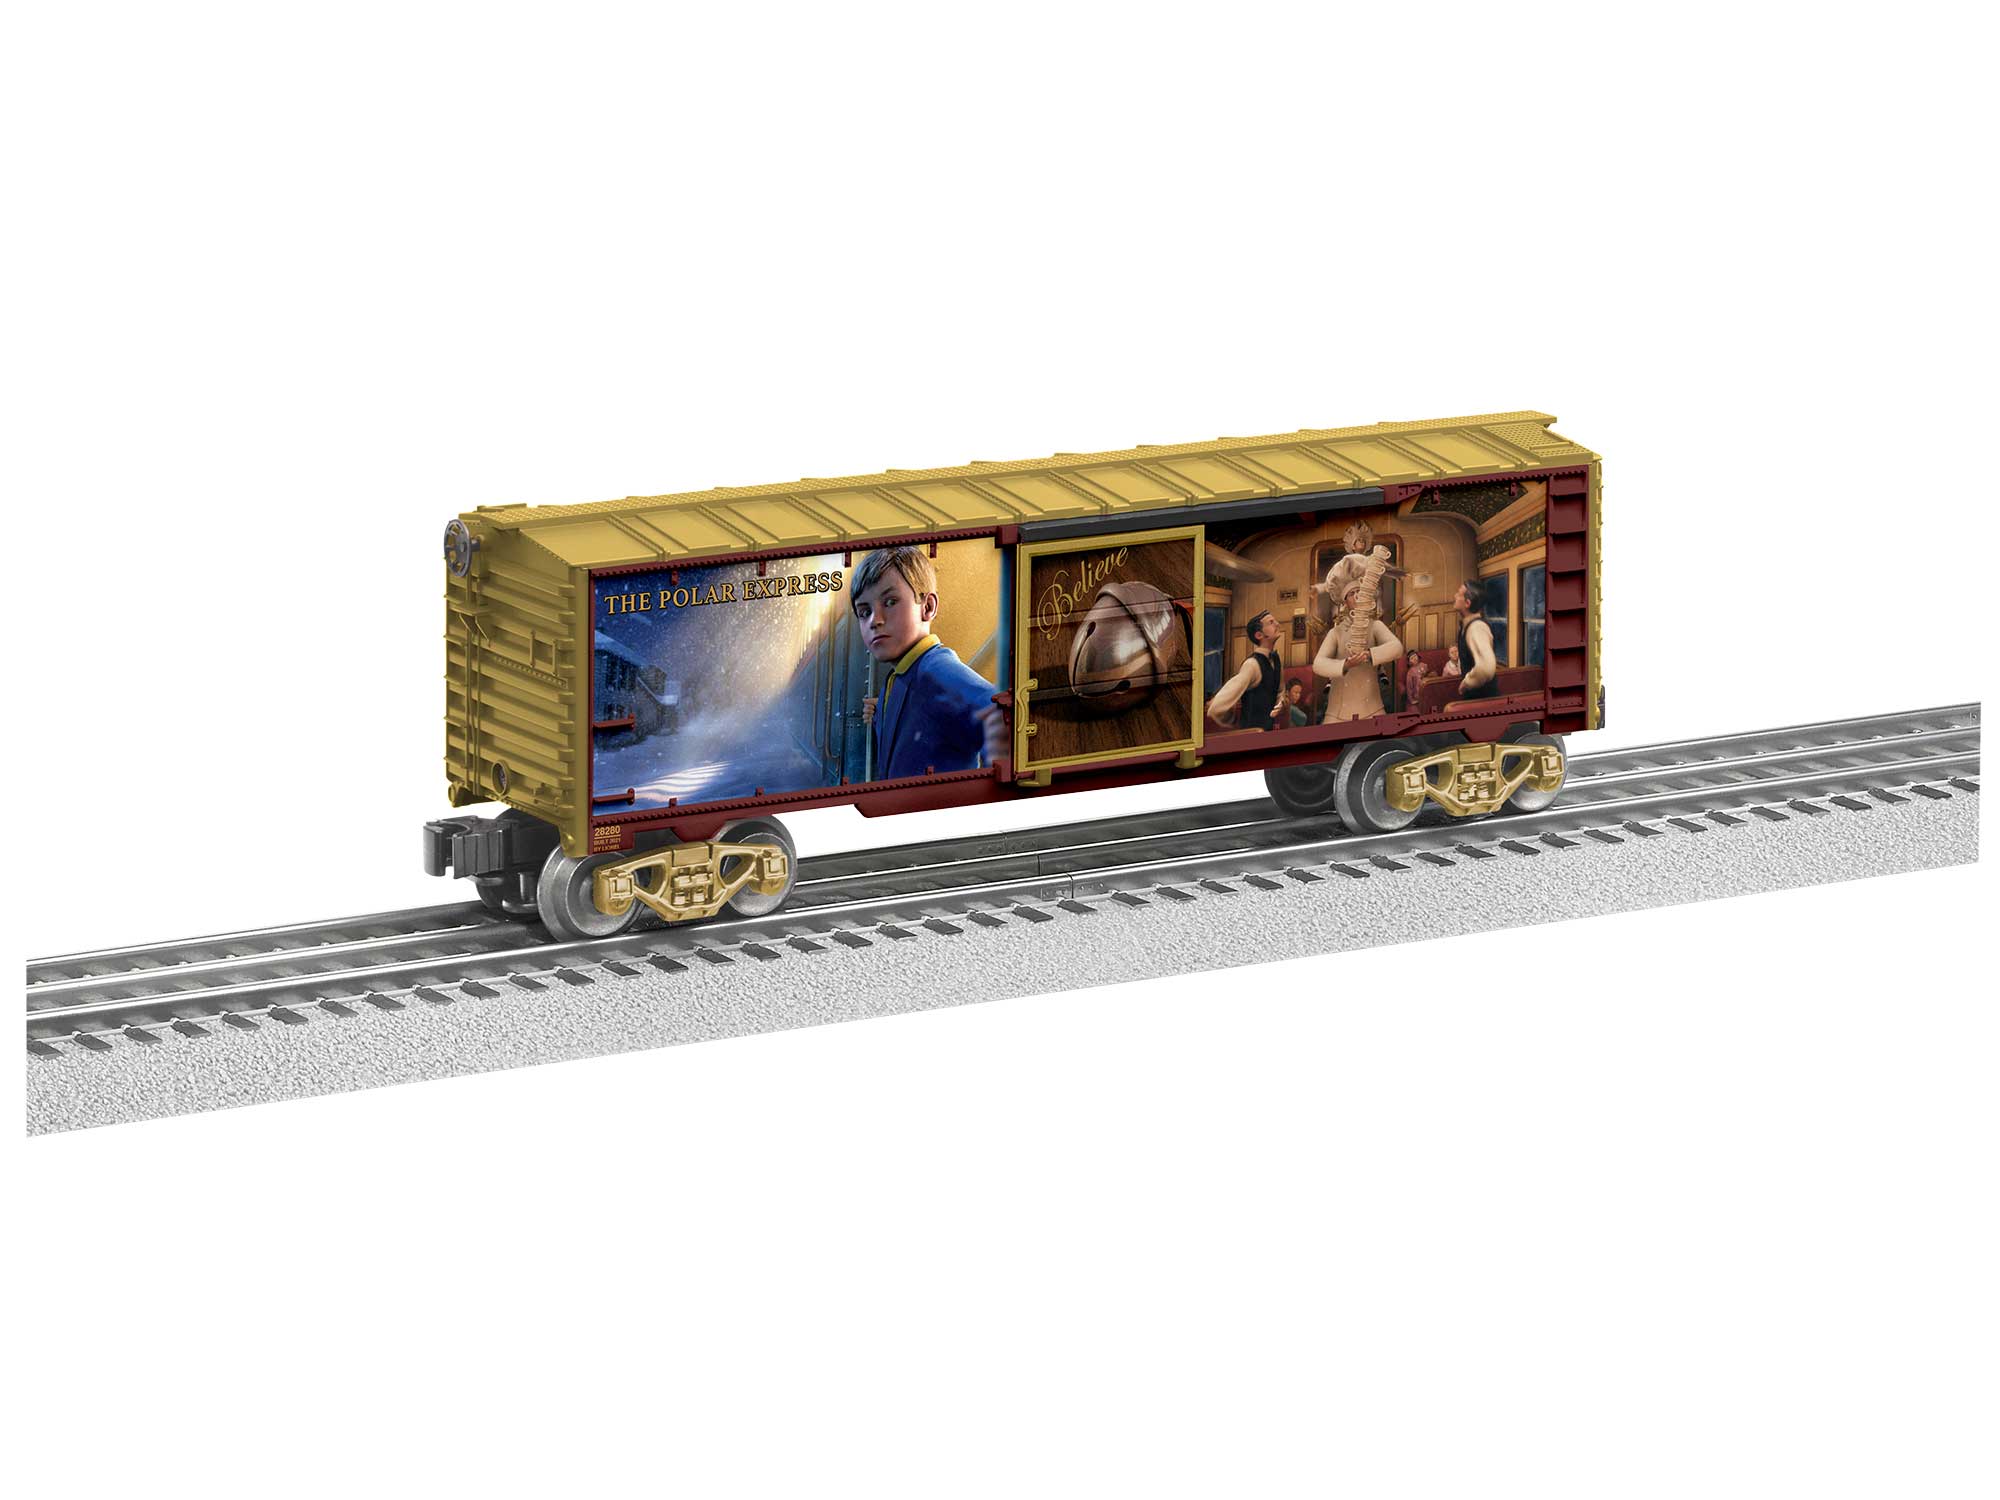 Details about   LIONEL 1923150 CHRISTMAS WINTER WONDERLAND EXPRESS BOXCAR O GAUGE TRAIN SLEIGH 